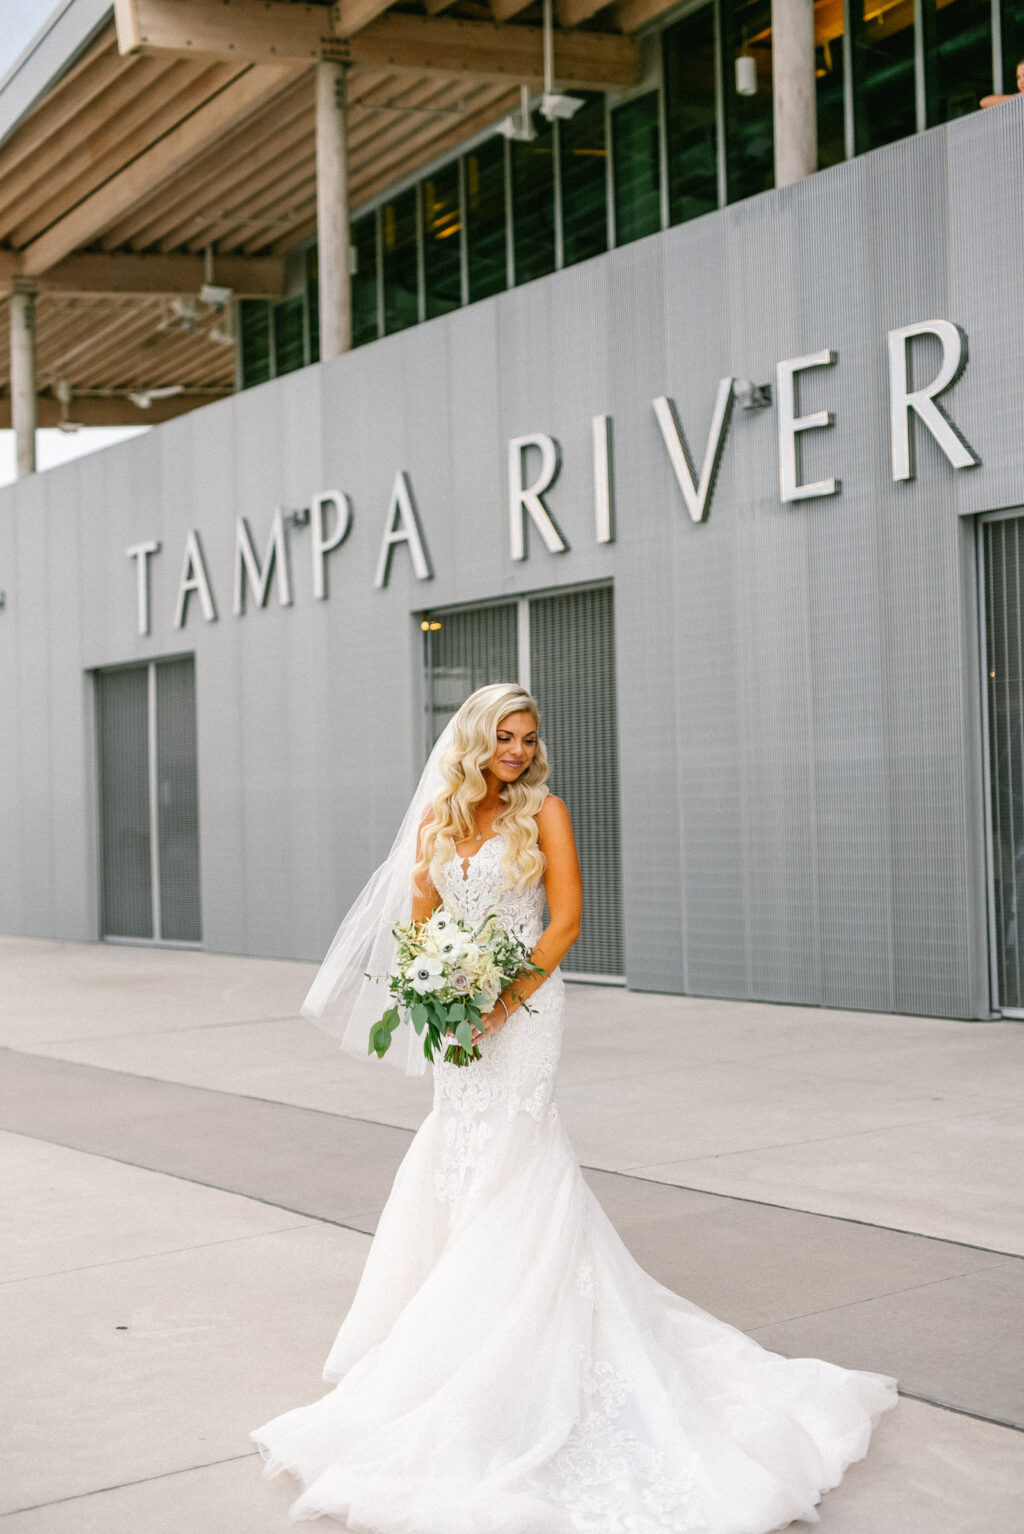 Modern Elegant Florida Bride Wearing Romantic Lace and Tulle Skirt Mermaid Wedding Dress Outside Wedding Venue Tampa River Center